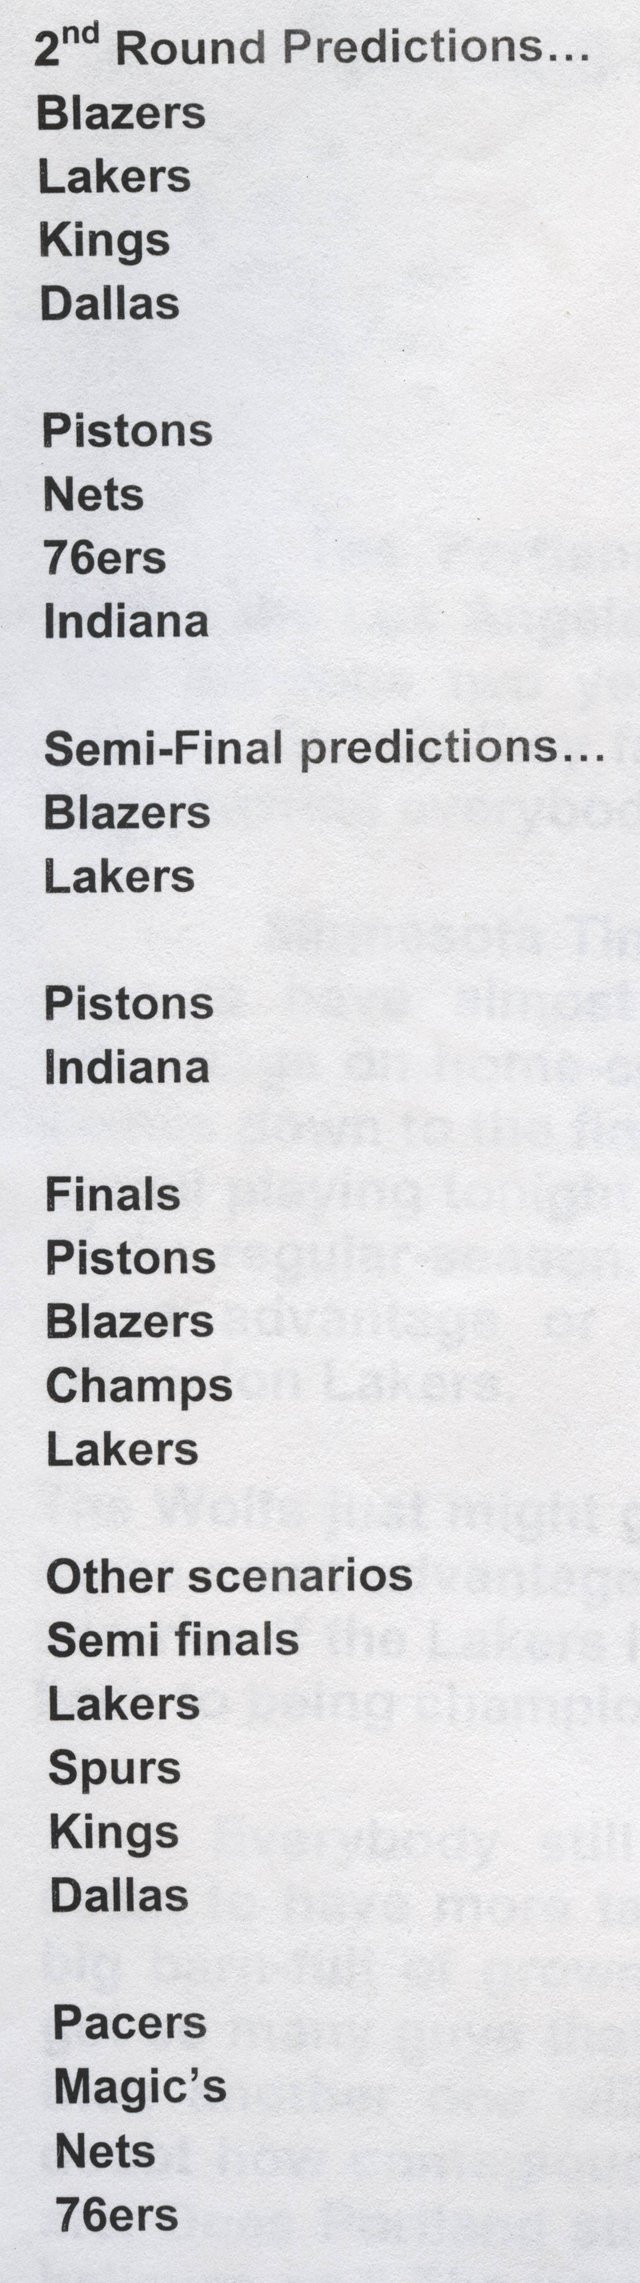 2004-04-16 Wed NBA Playoffs Predictions-3.jpg